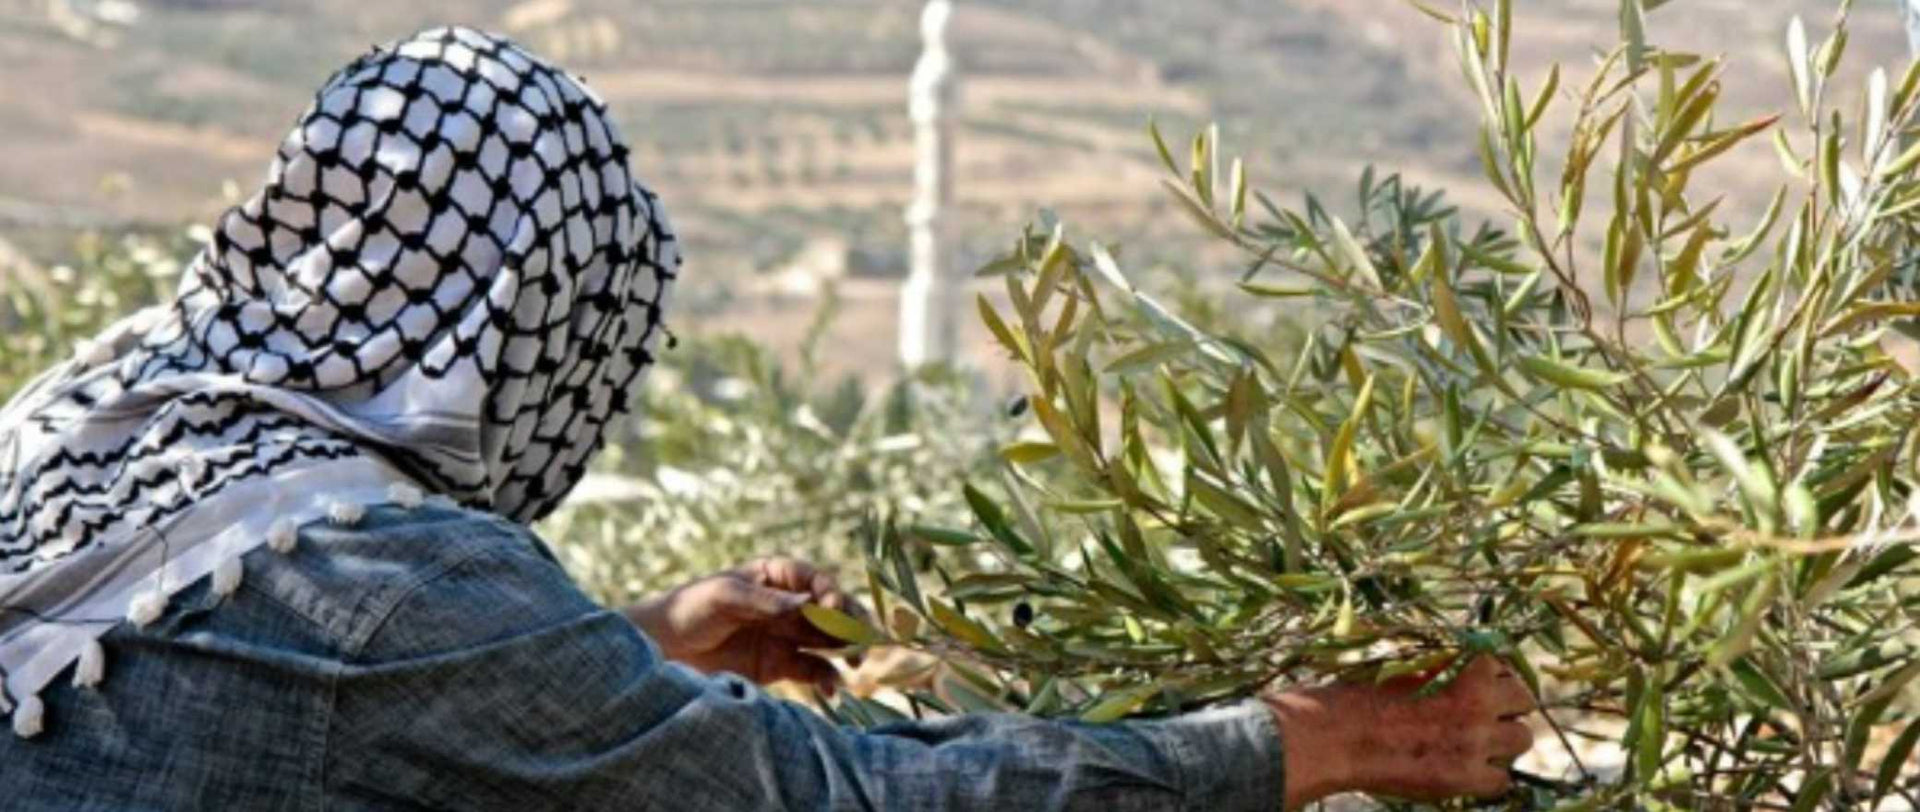 Zaytoun - Picking Olives